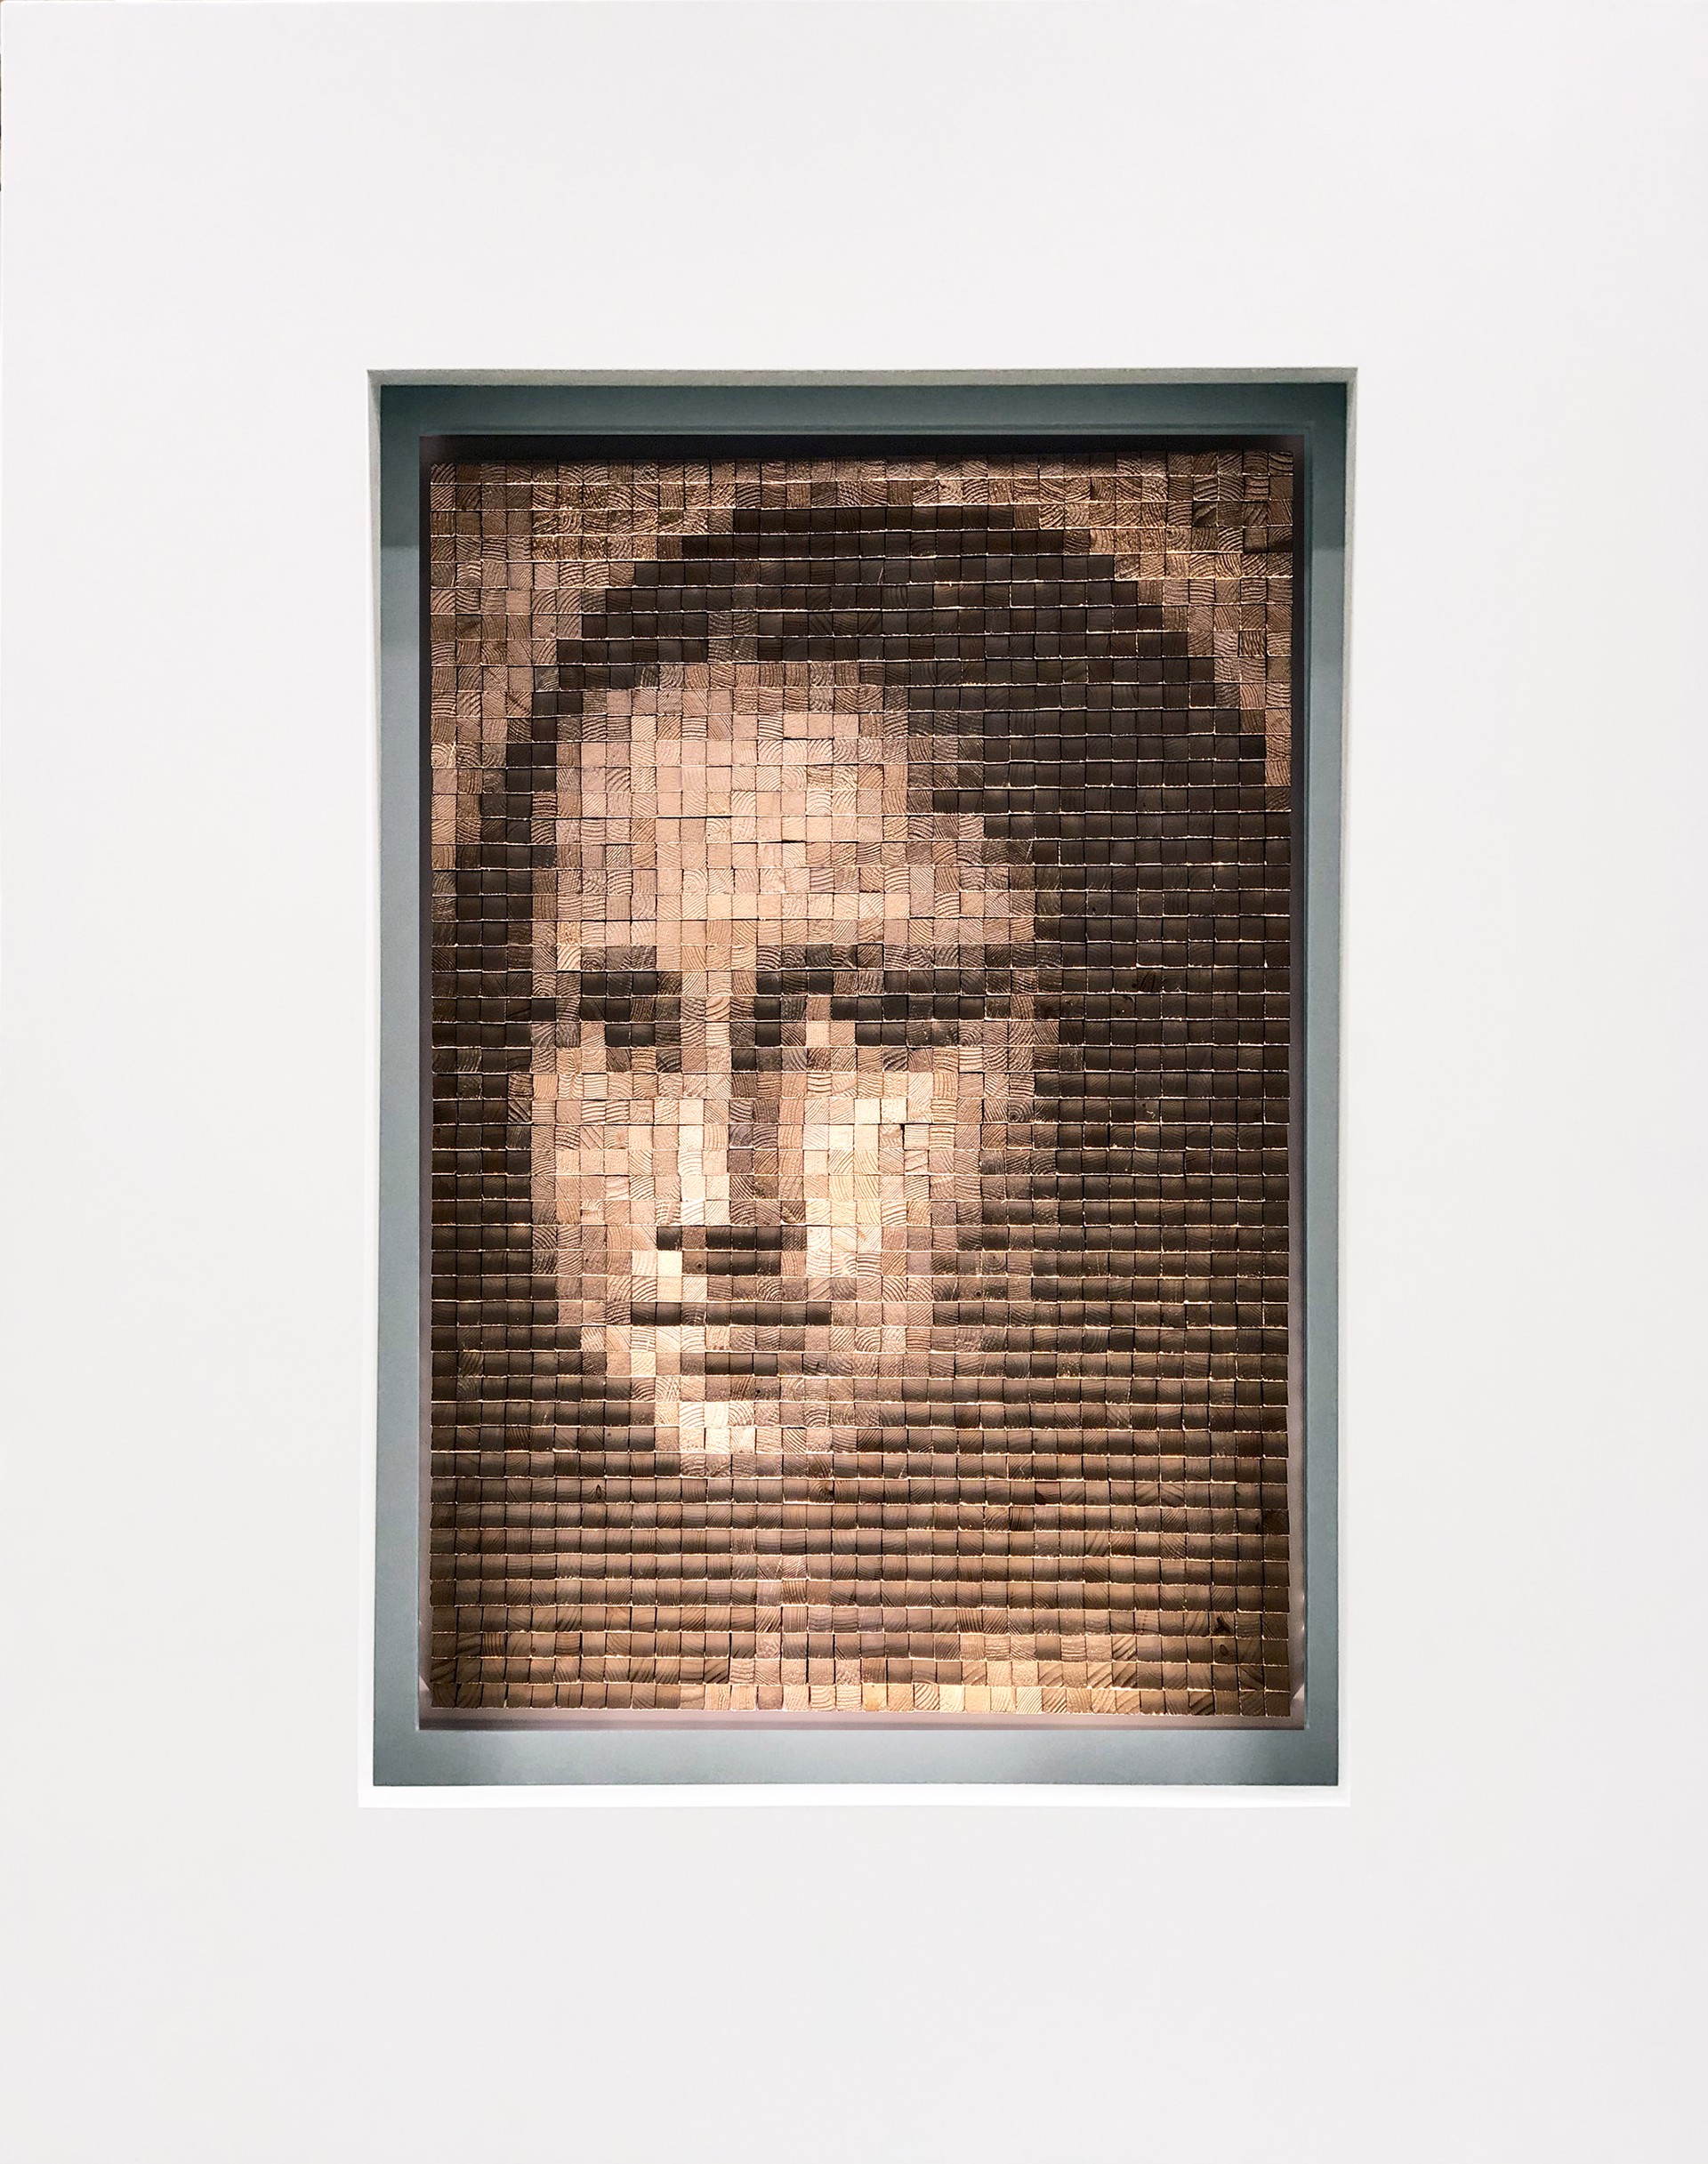 Mona Lisa by J.P. Goncalves, Pixel